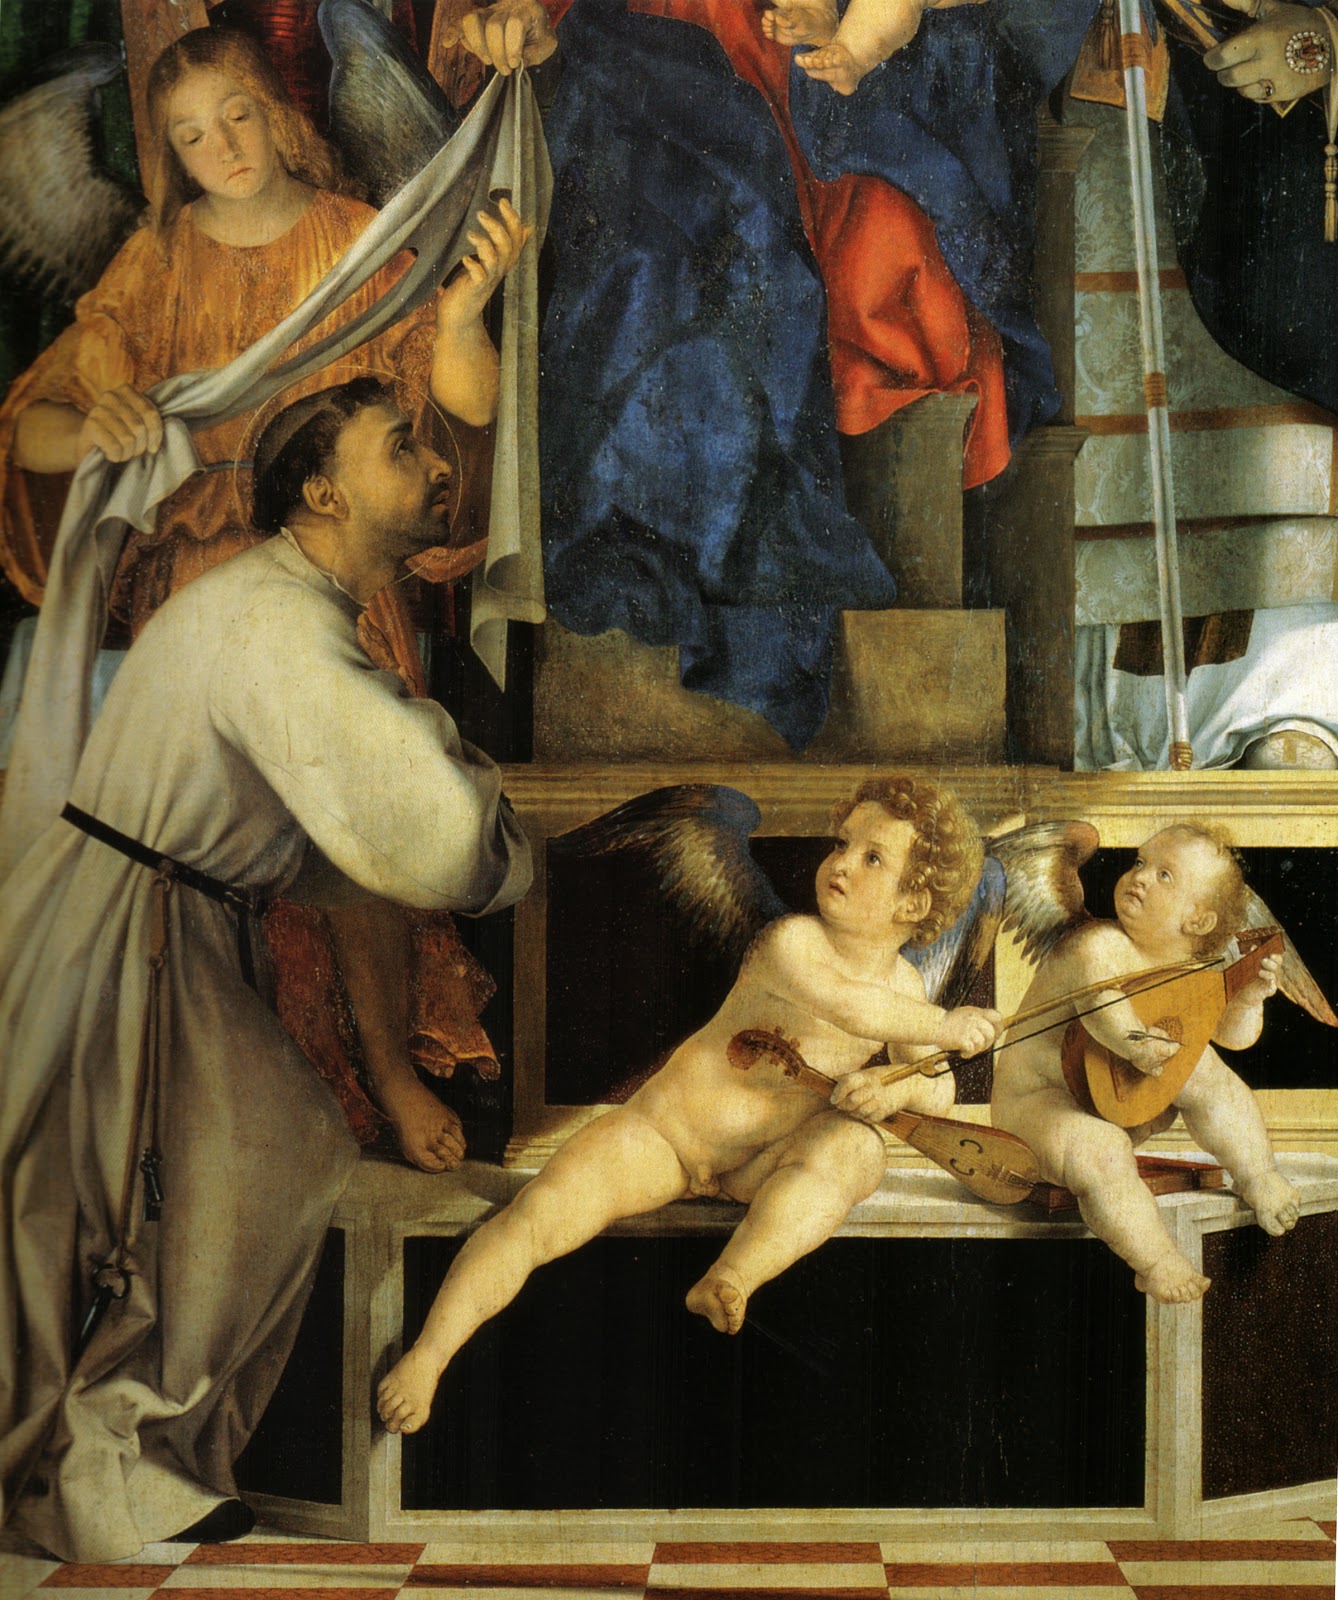 Lorenzo+Lotto-1480-1557 (79).jpg